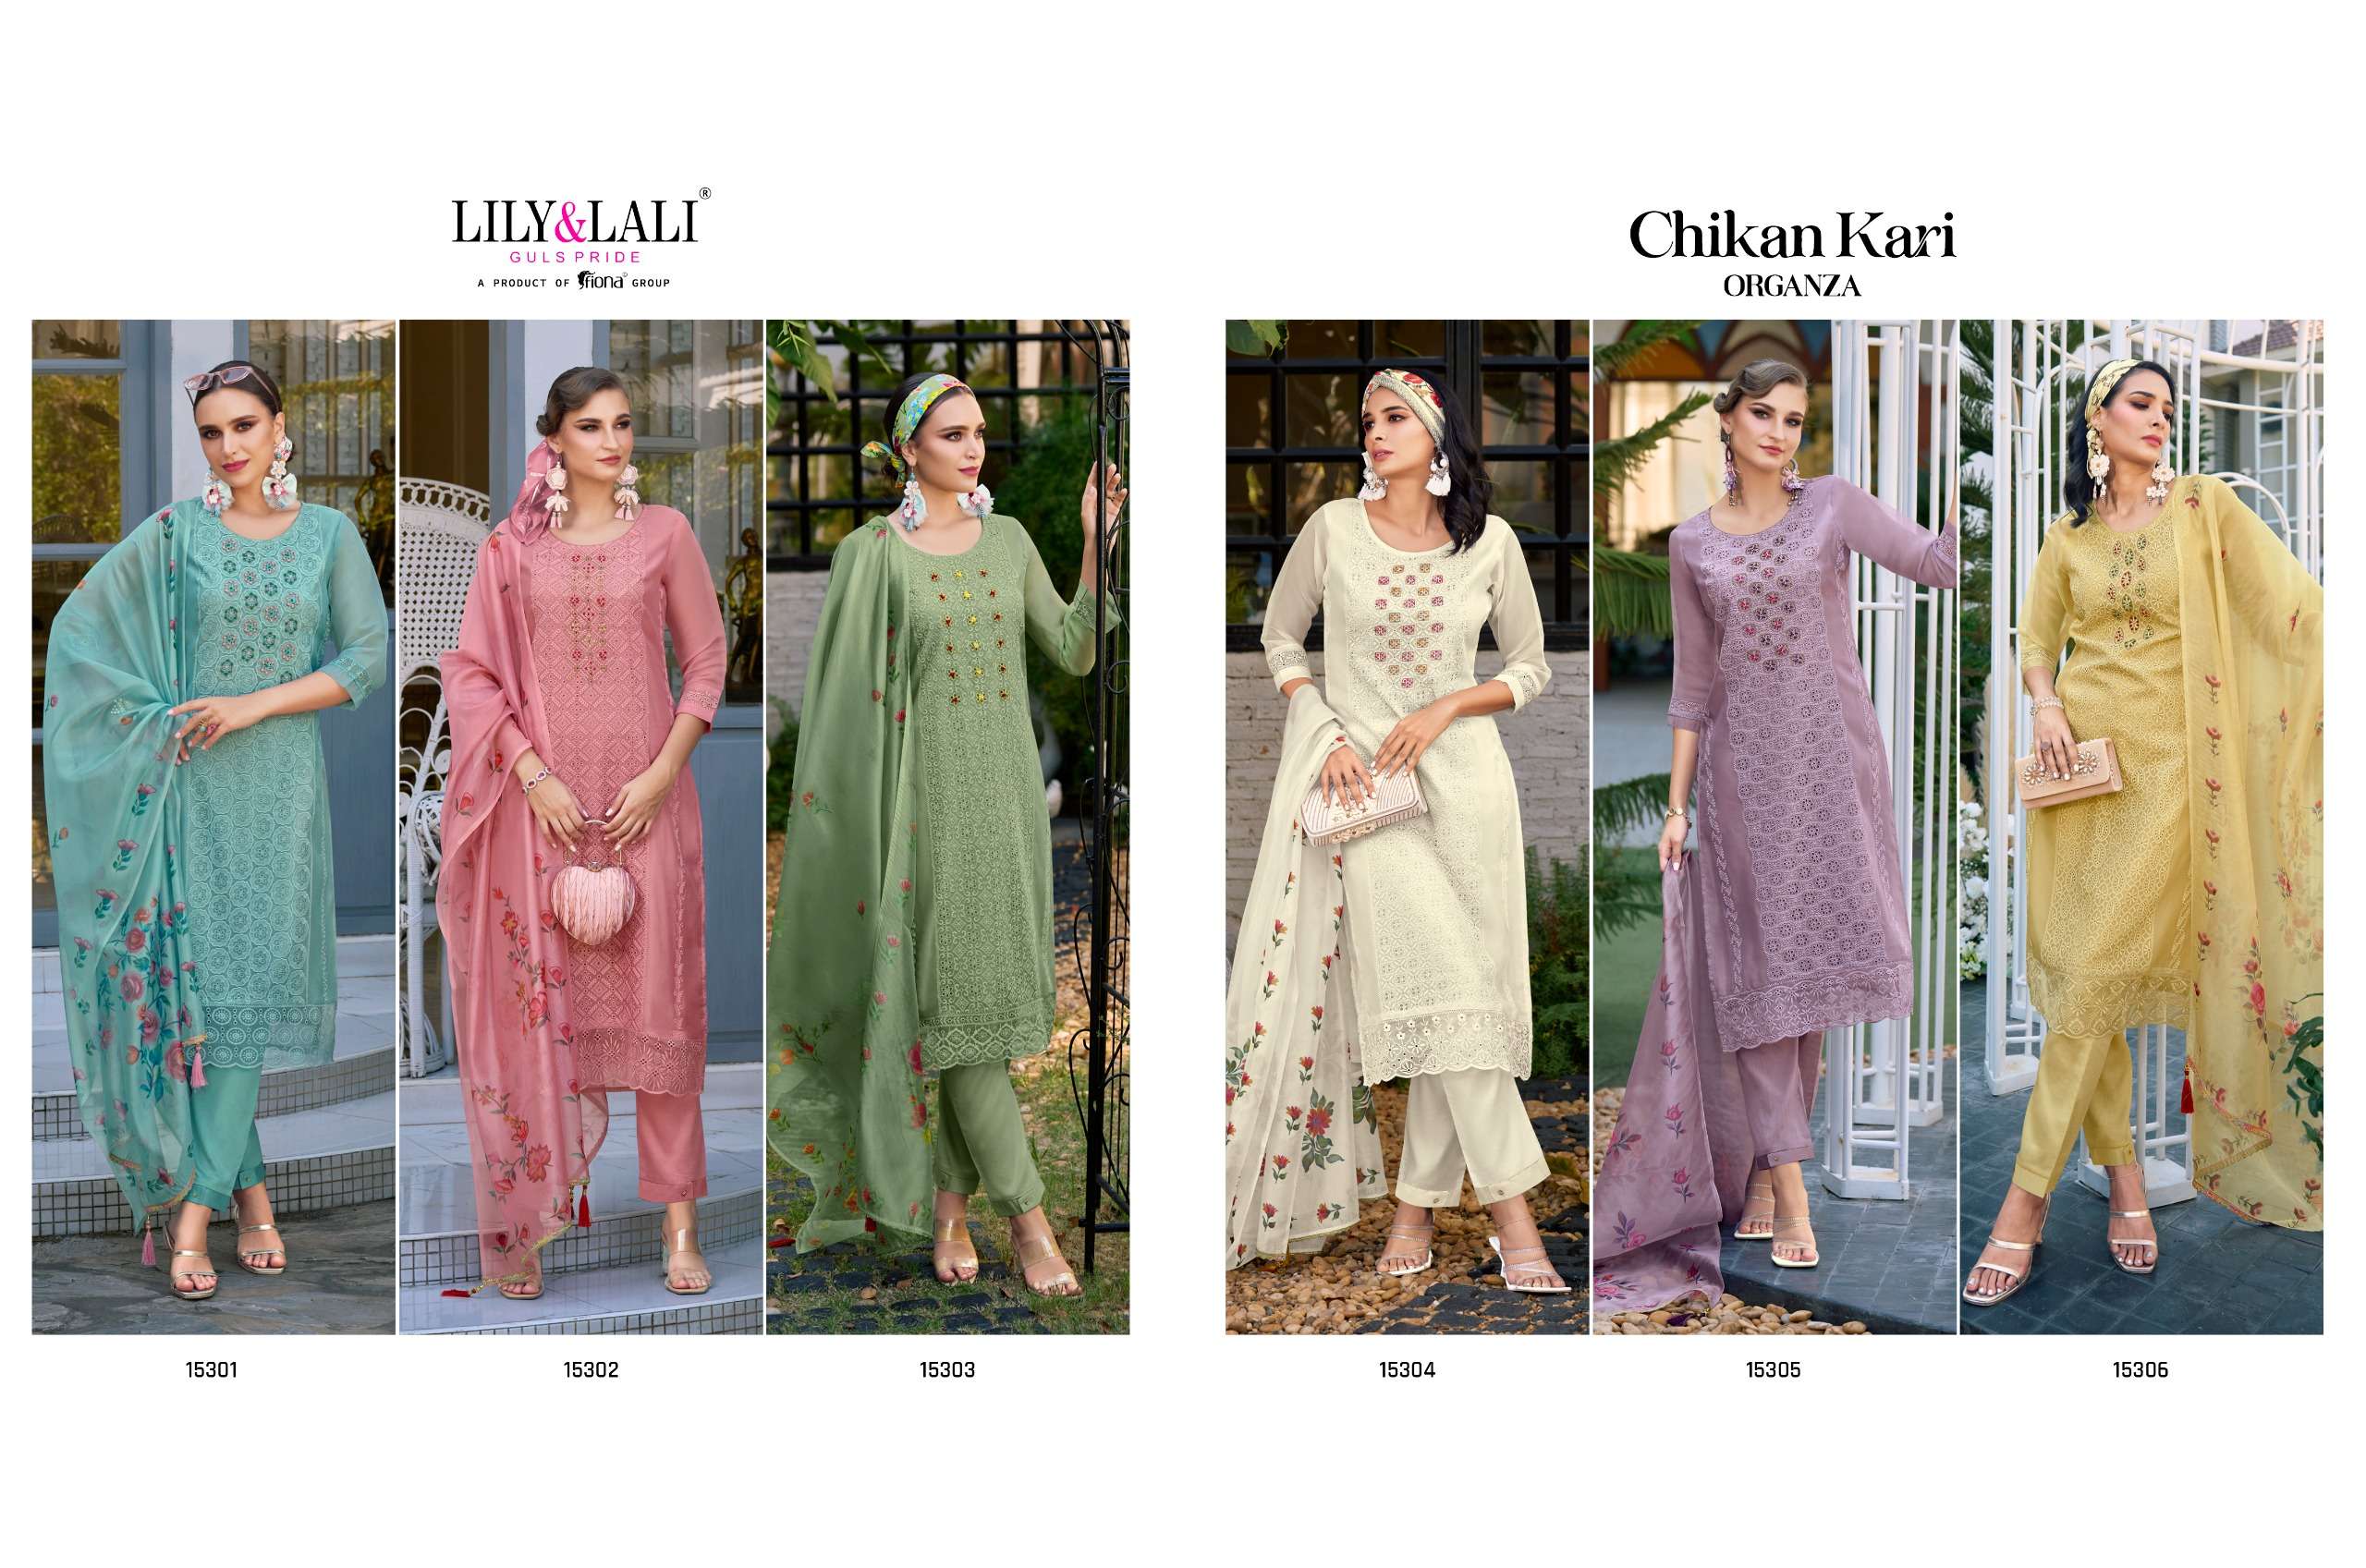 Chikankari Organza Buy Lily Lali Wholesale Online Lowest Price Handwork Kurta Suit Sets